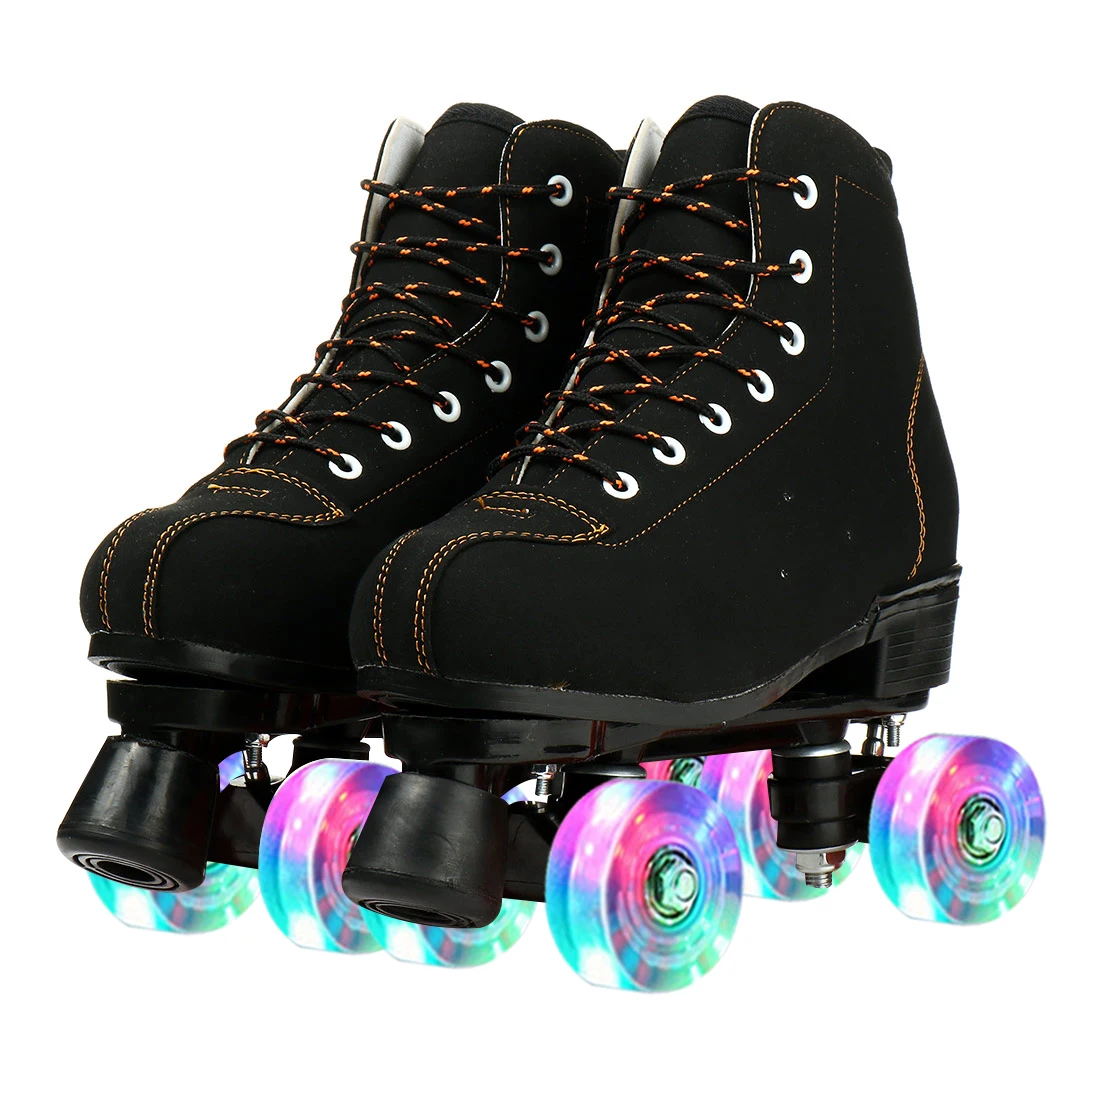 Artificial Leather Roller Skates Skating Shoes 2 Row Adult 4-Wheel Skates Roller Women Men Skating Shoes Flash Patines